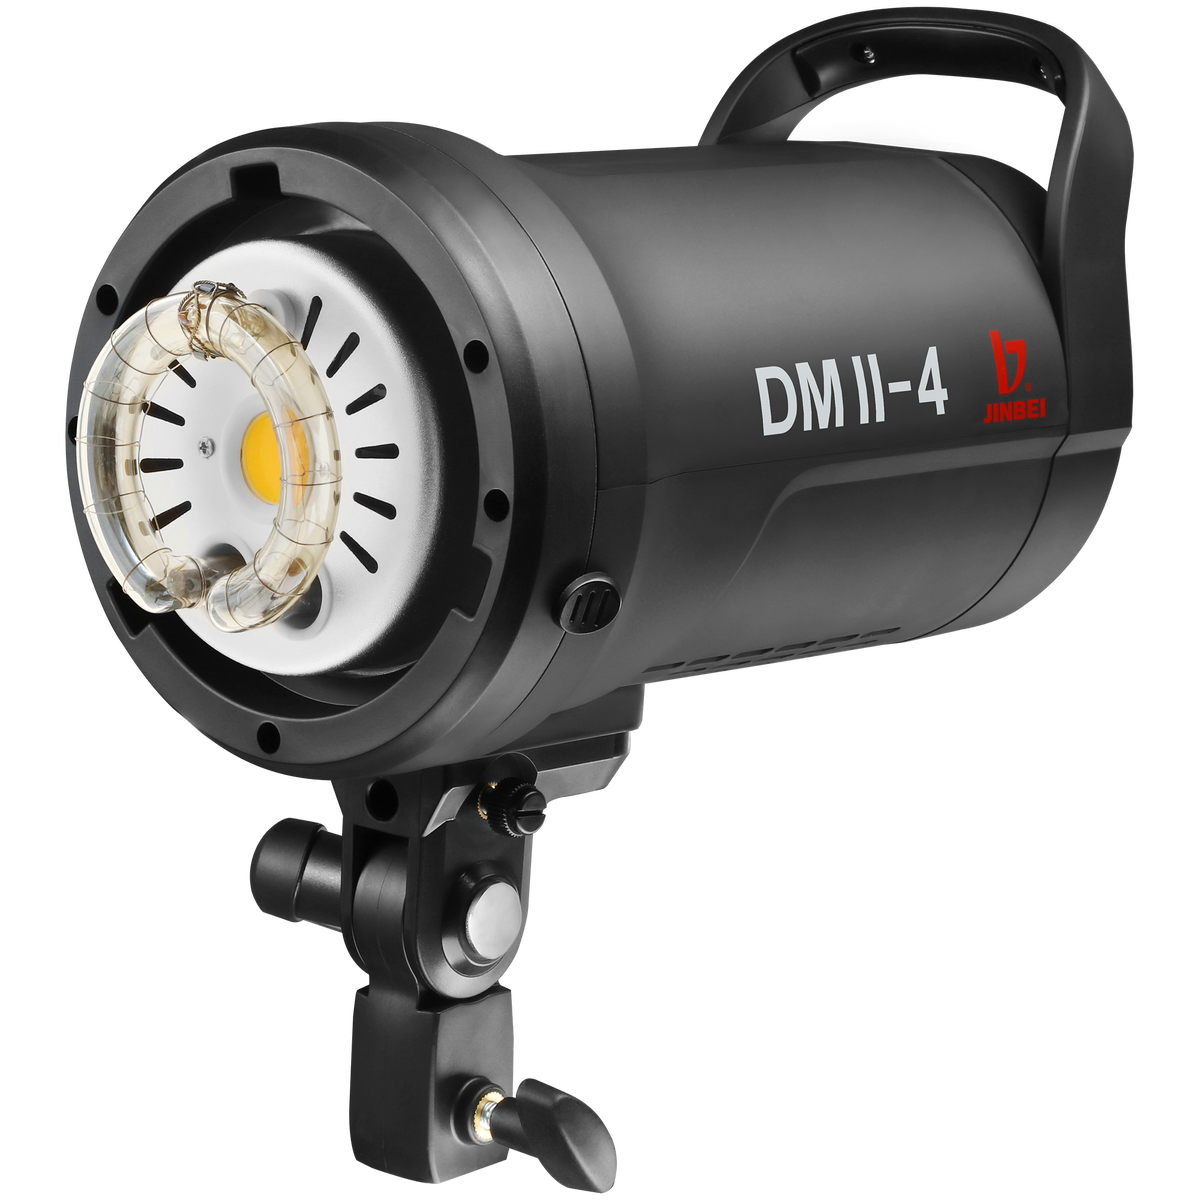 DMII-4 studio flash